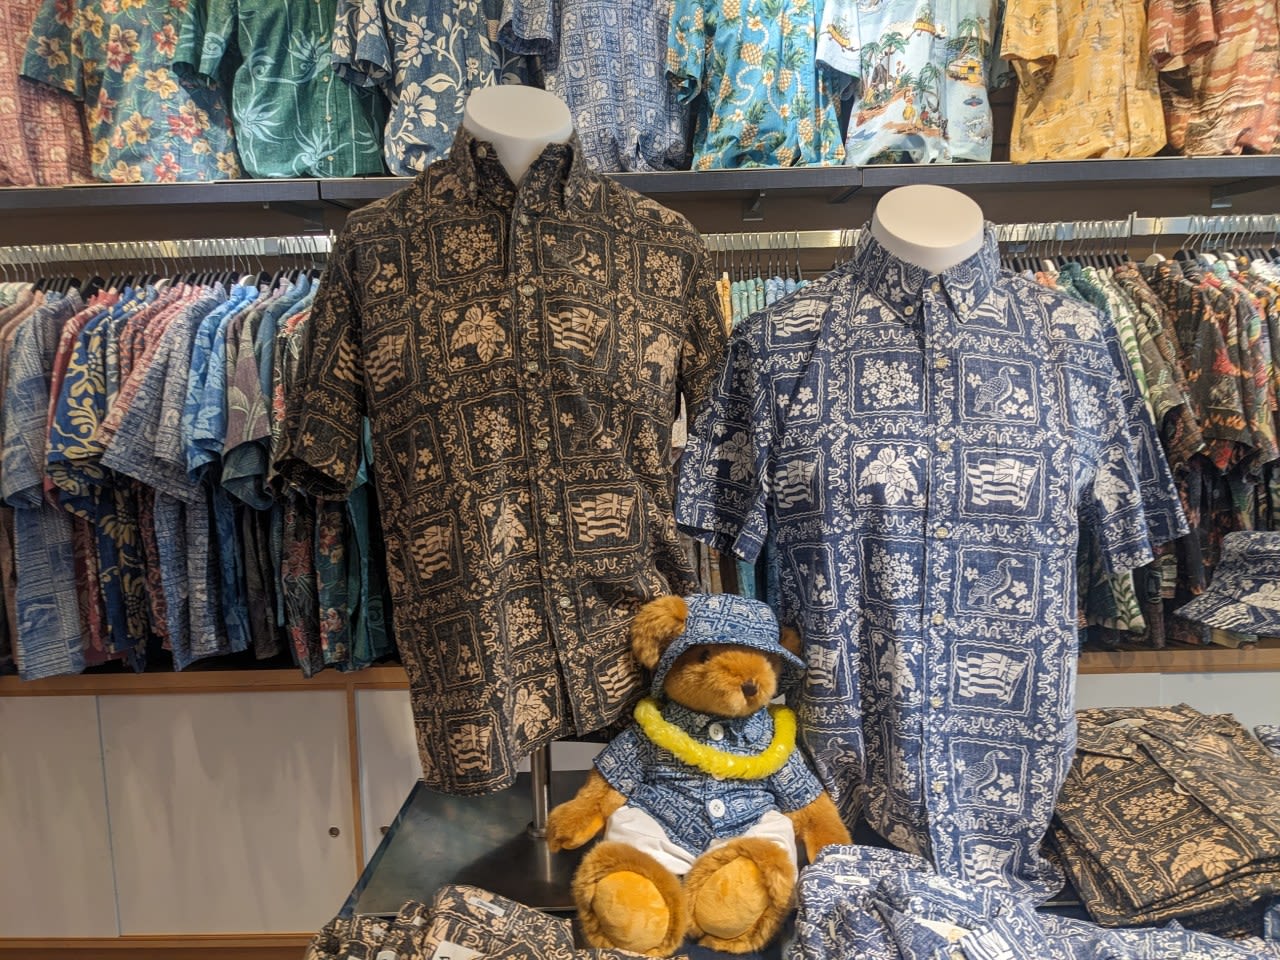 Scammers target popular aloha shirt maker customers